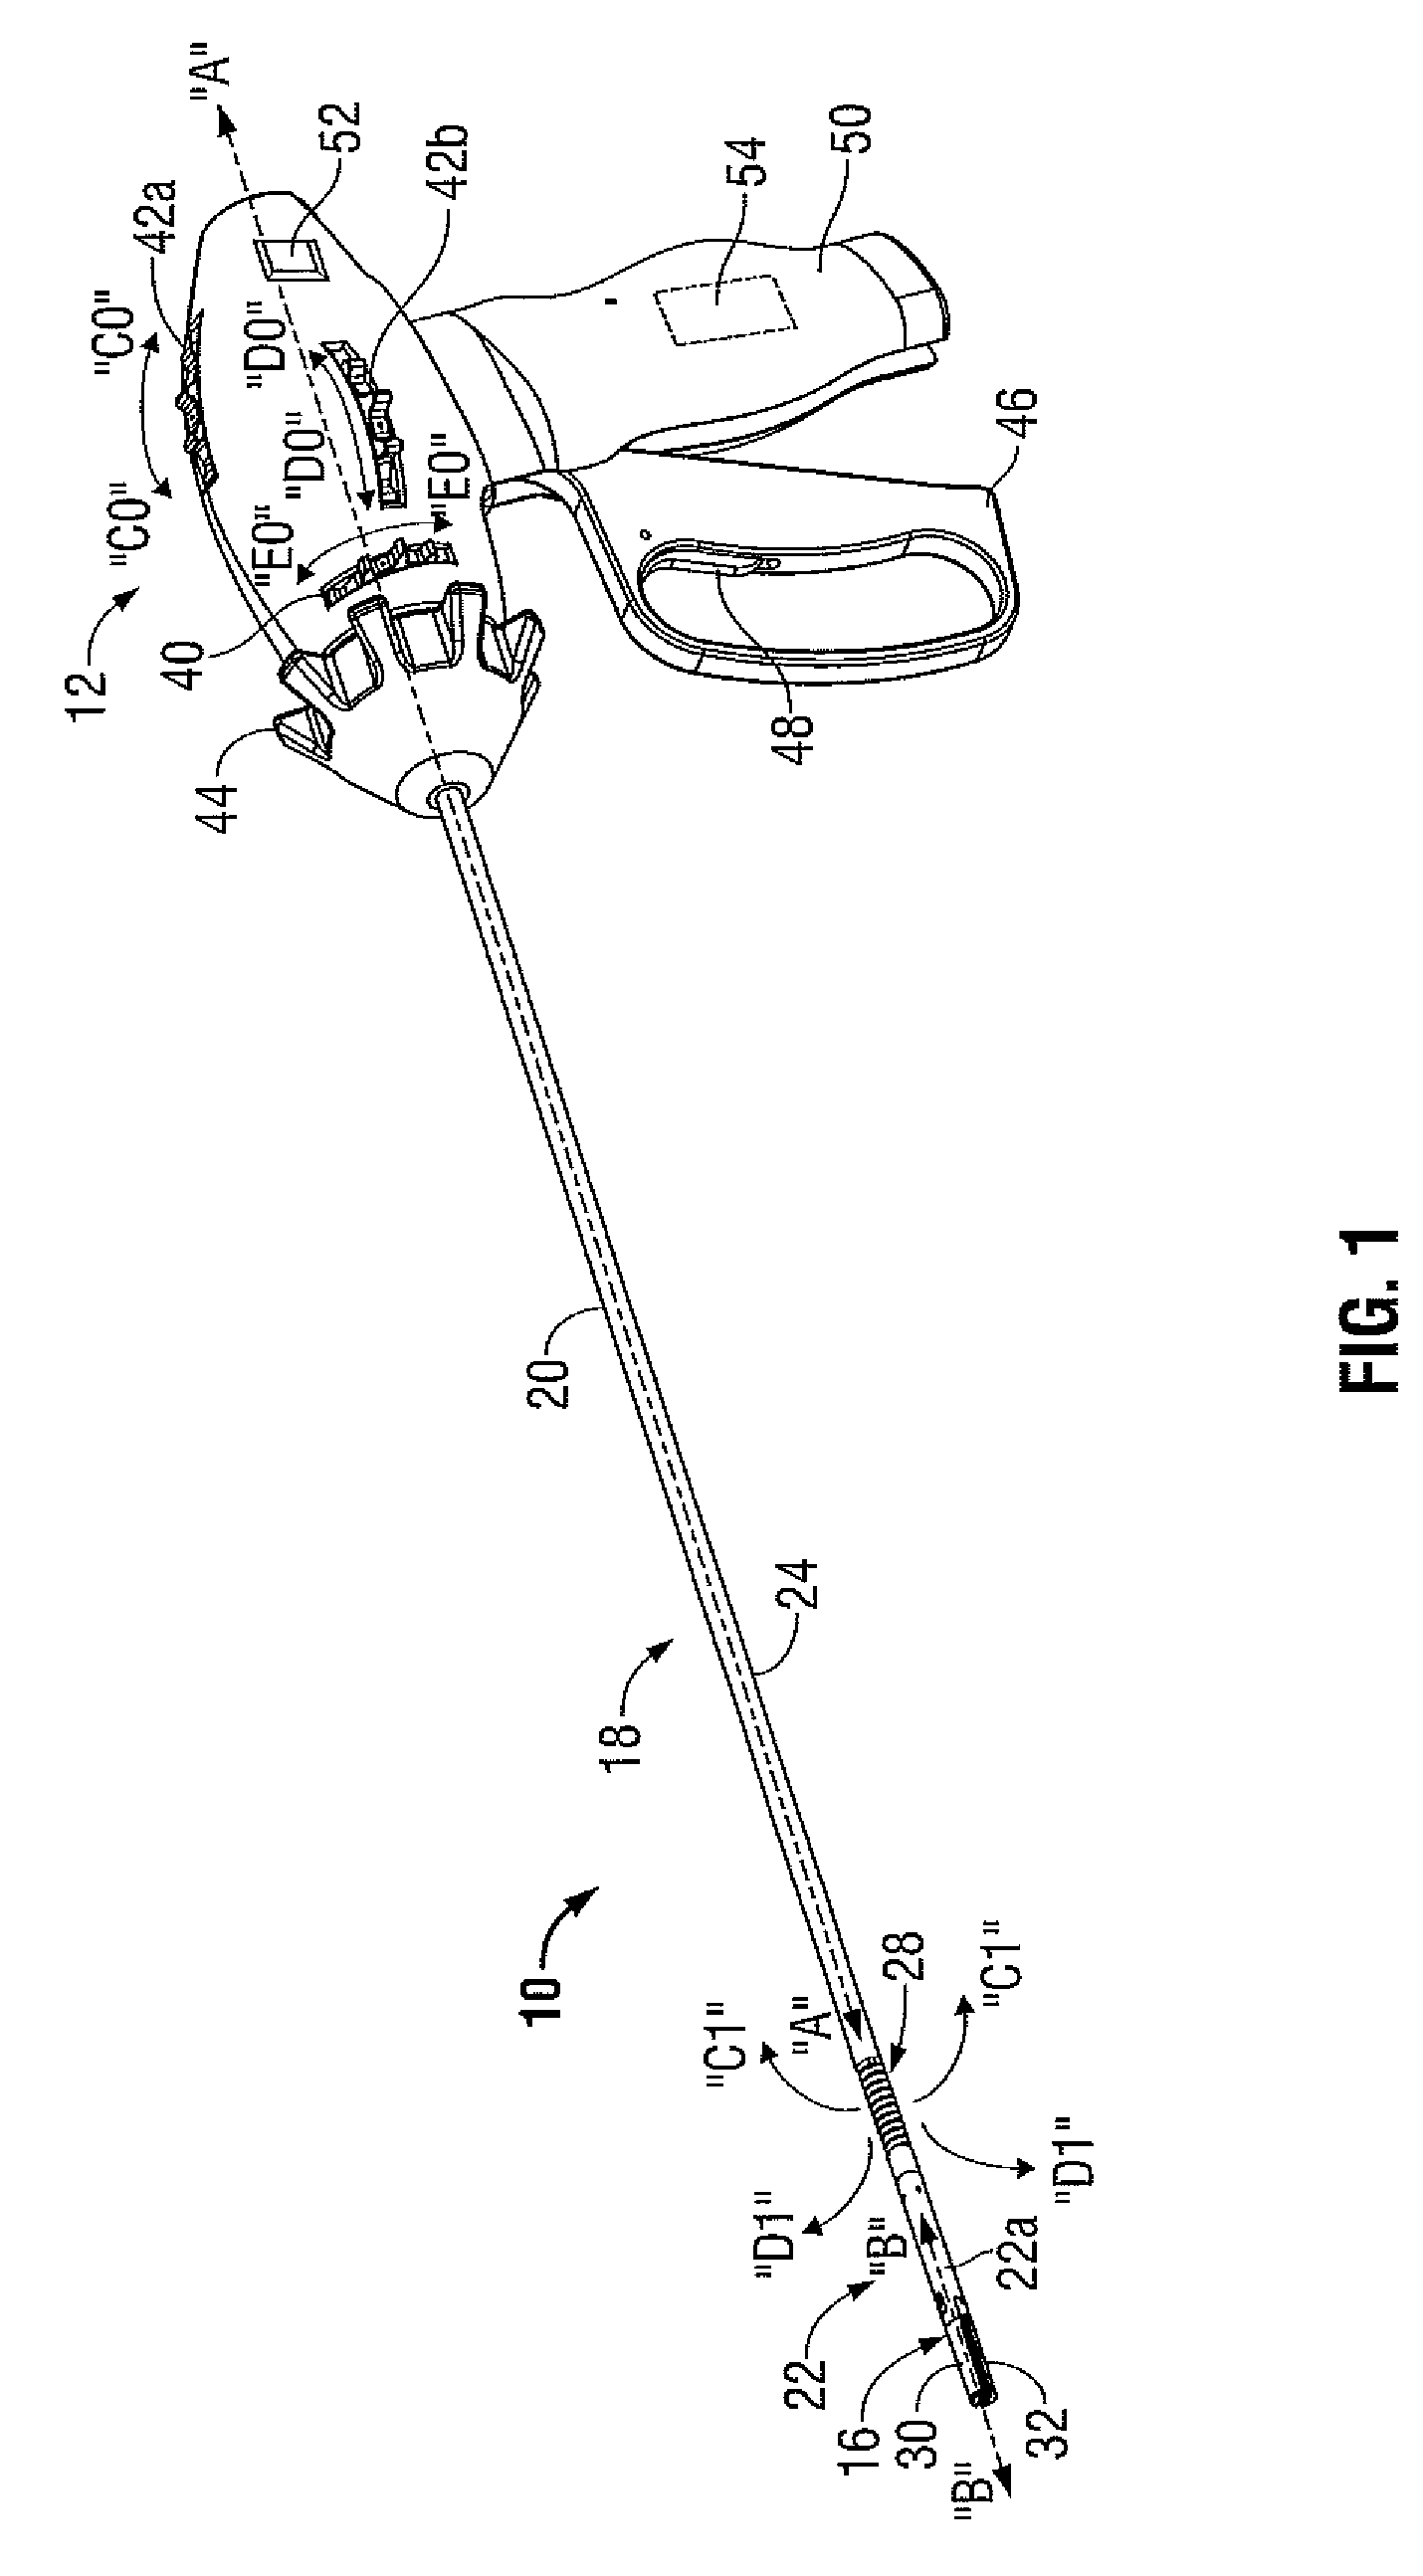 Coaxial coil lock